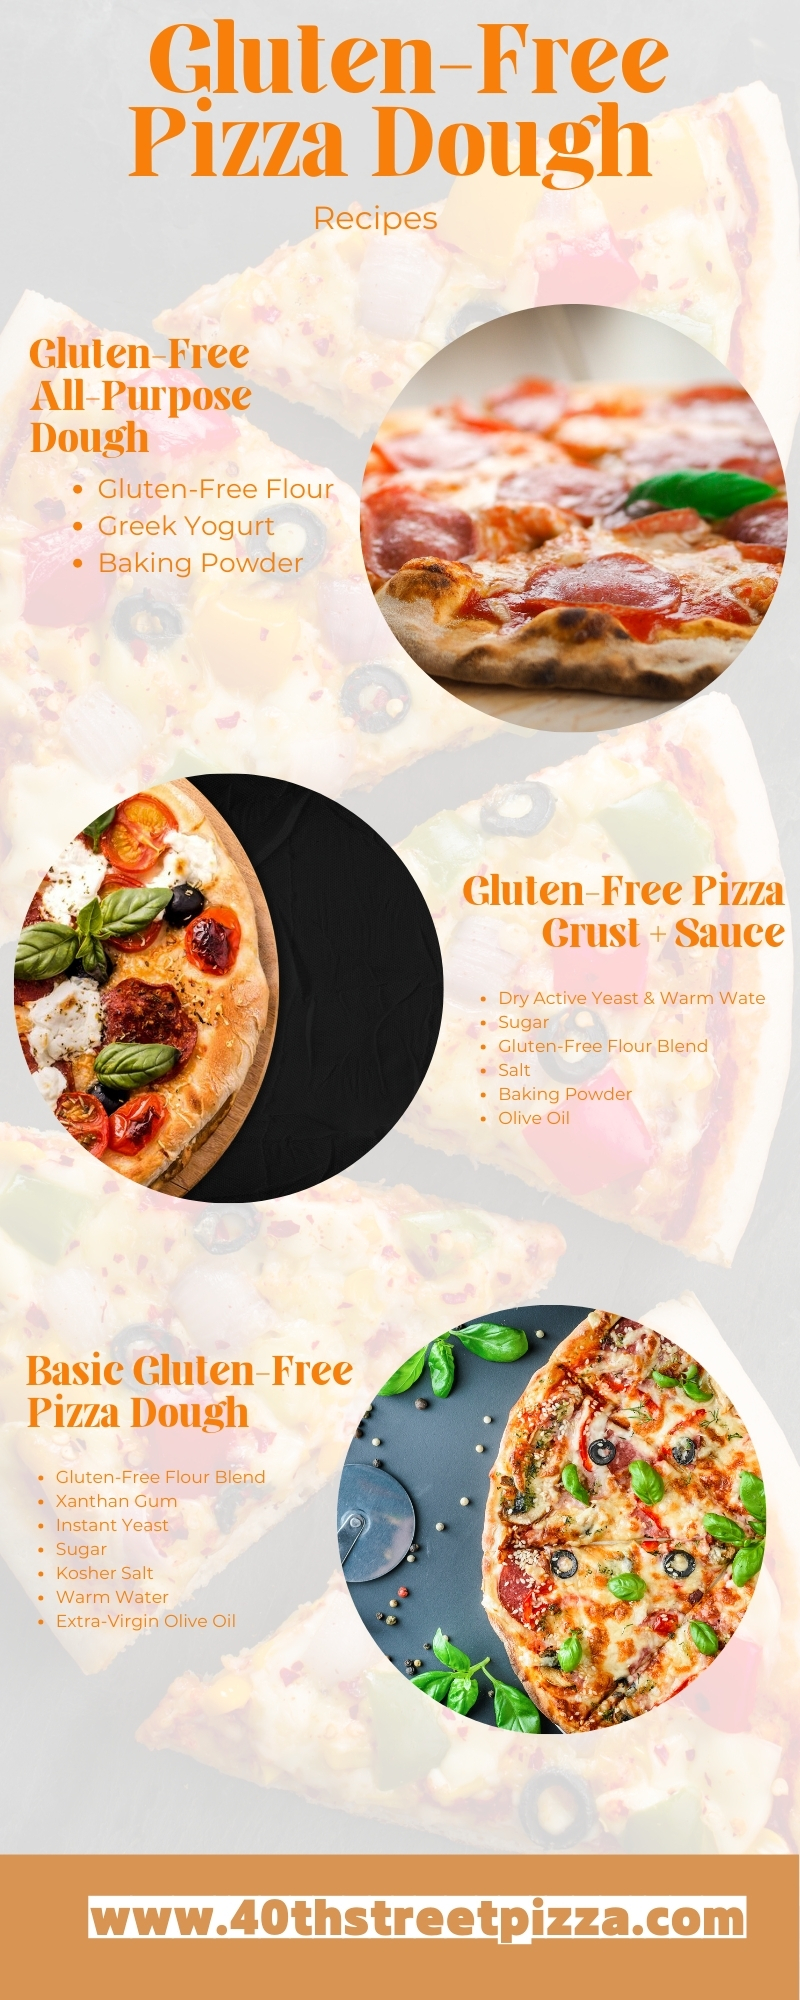 Gluten-Free Dough Pizza infographic